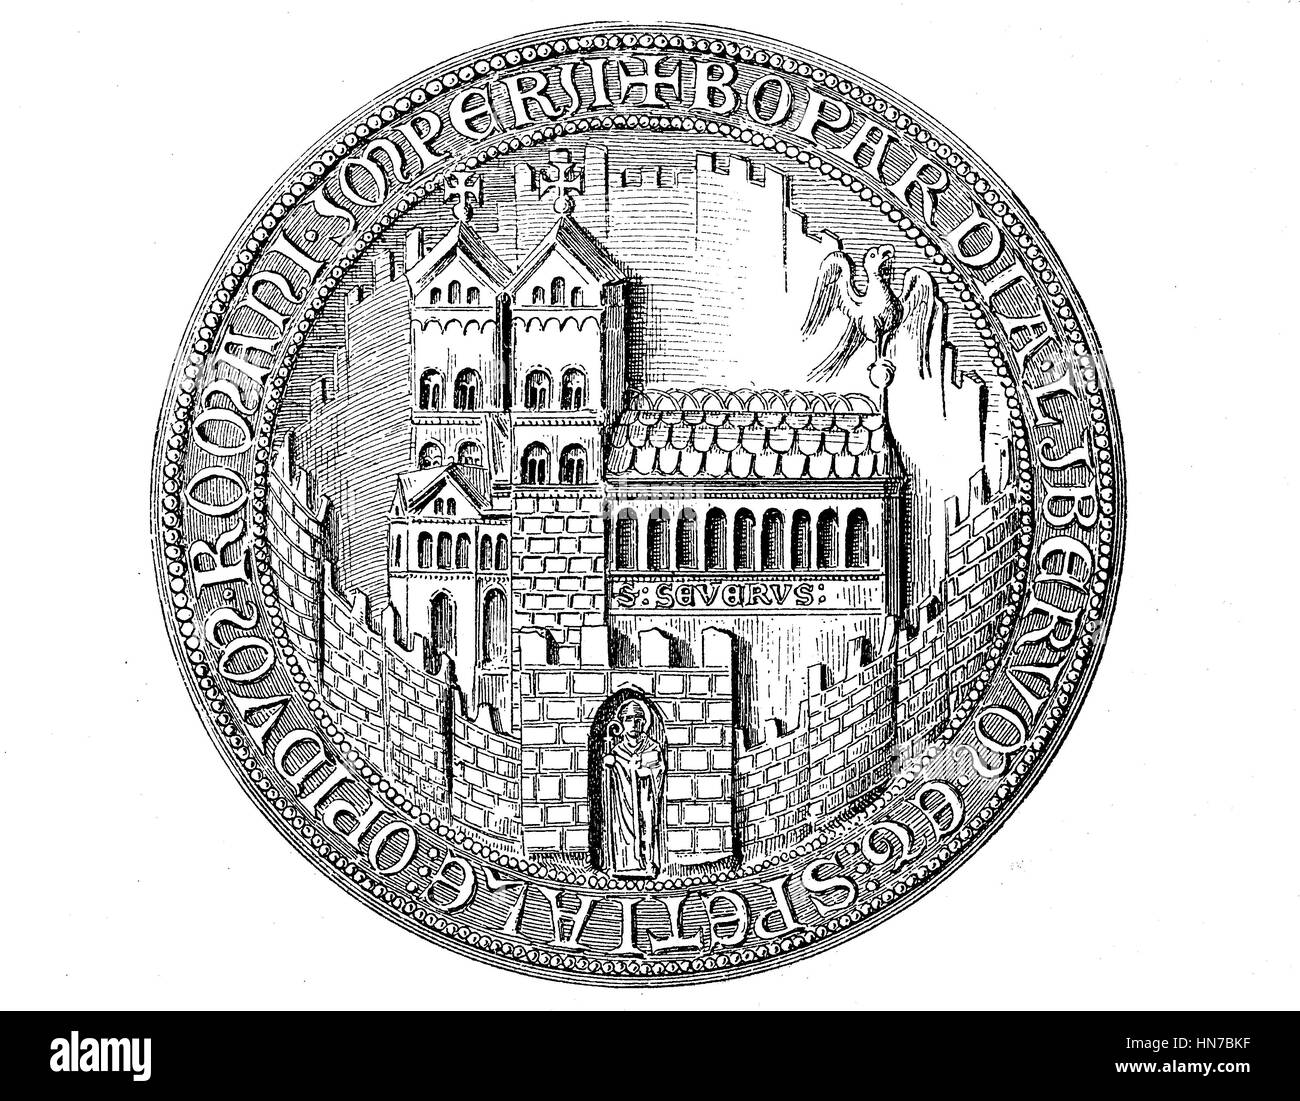 Medieval town seal from the 13th to 15th century, here Boppard, Germany, Mittelalterliches Stadtsiegel aus dem 13. bis 15. Jahrhundert, hier Boppard, Deutschland, woodcut from 1885, digital improved Stock Photo